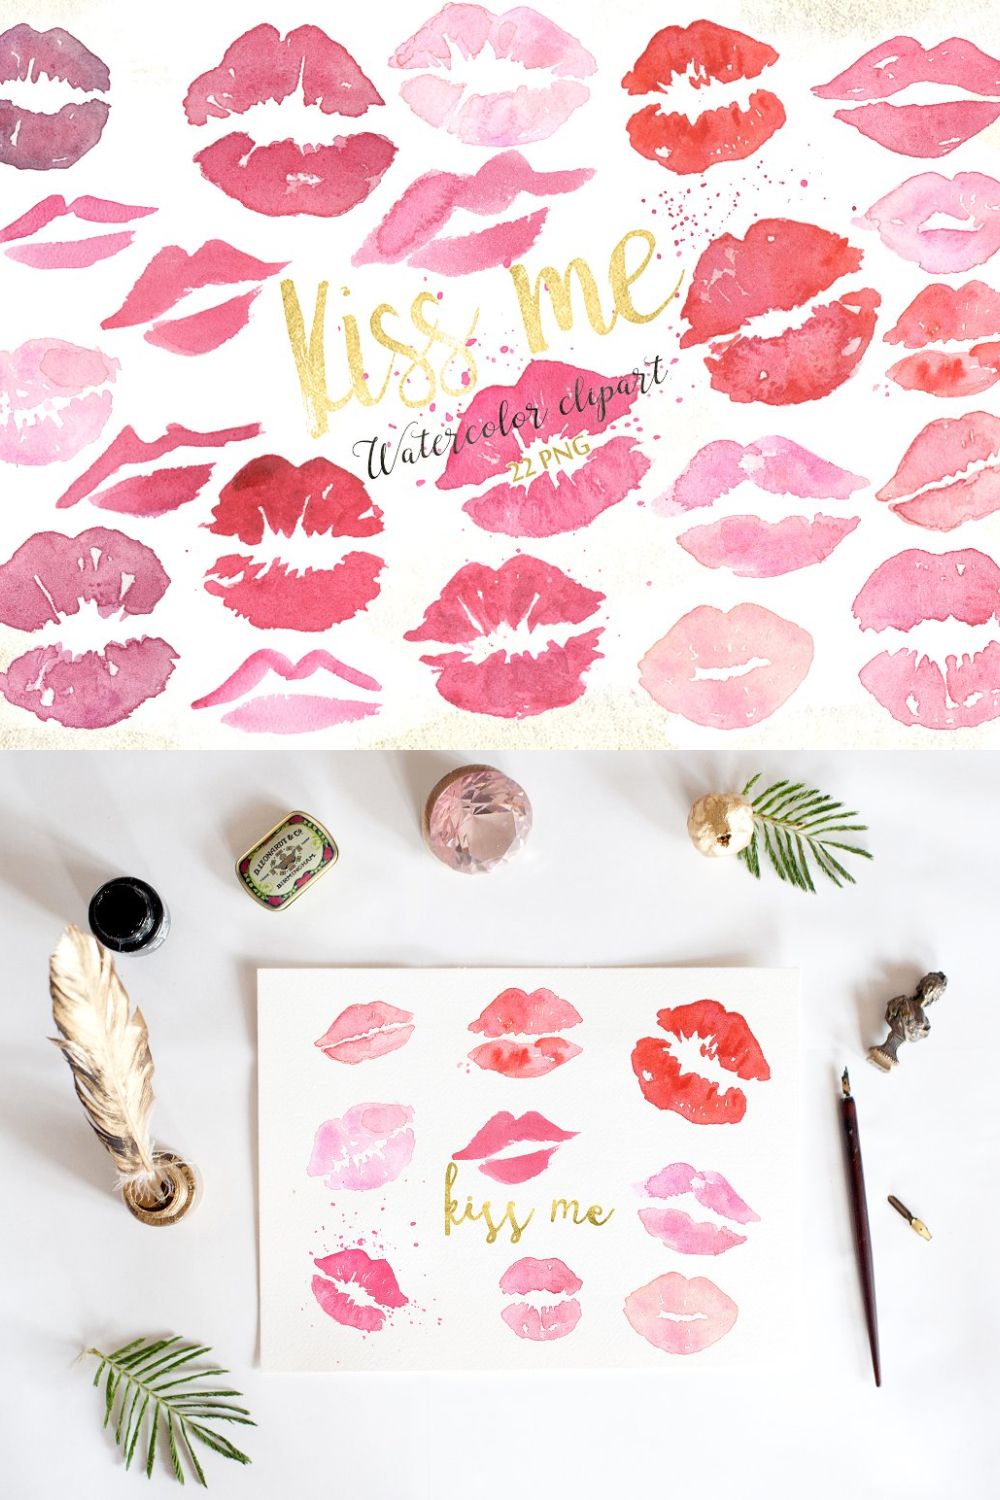 -50% Off Kisses Valentine Watercolor - Pinterest.